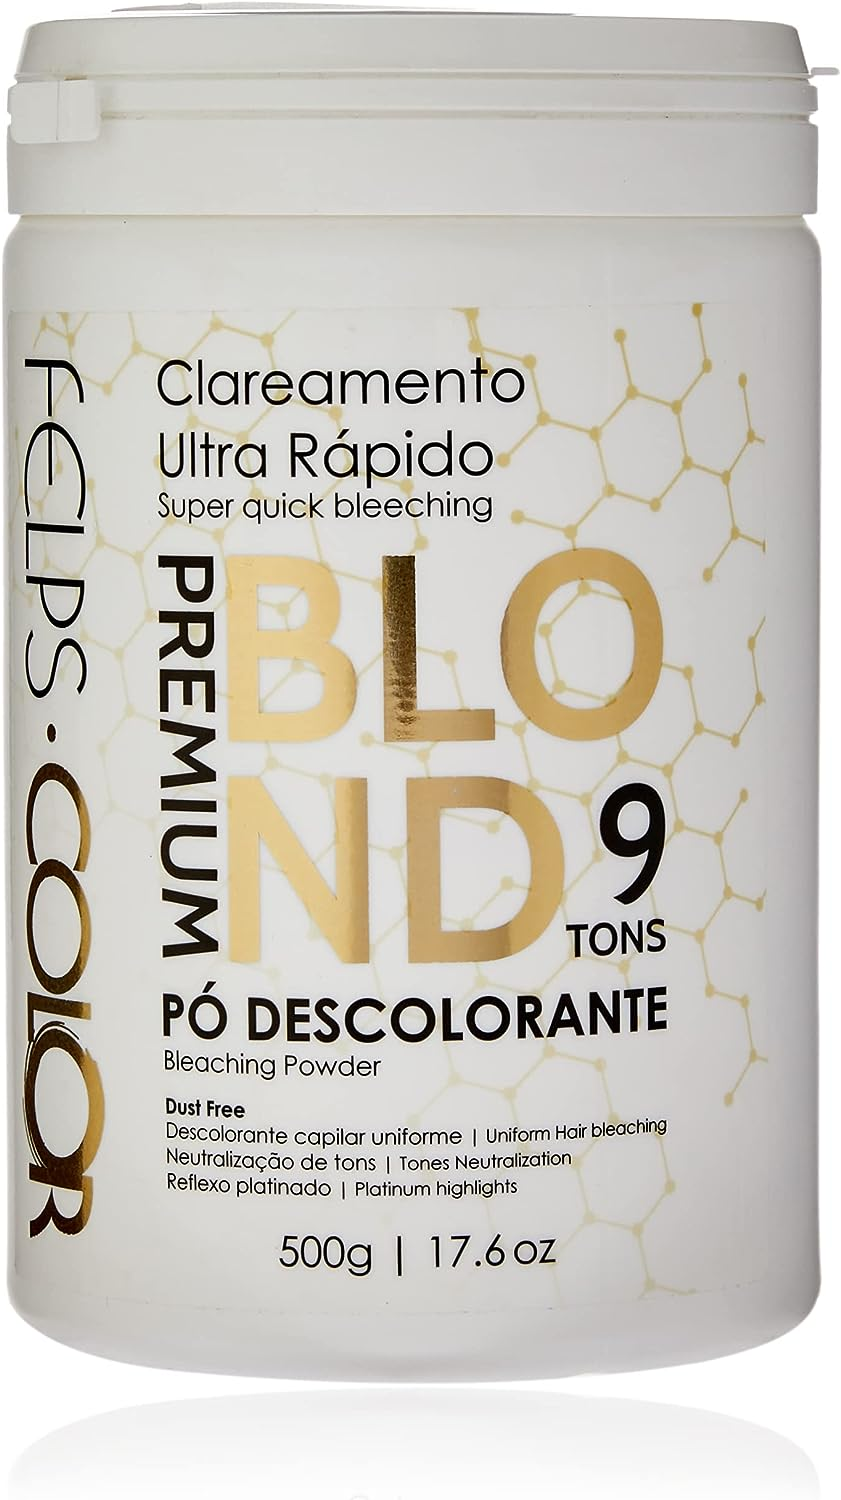 Pó Descolorante Blond Premium Felps. Imagem: Amazon